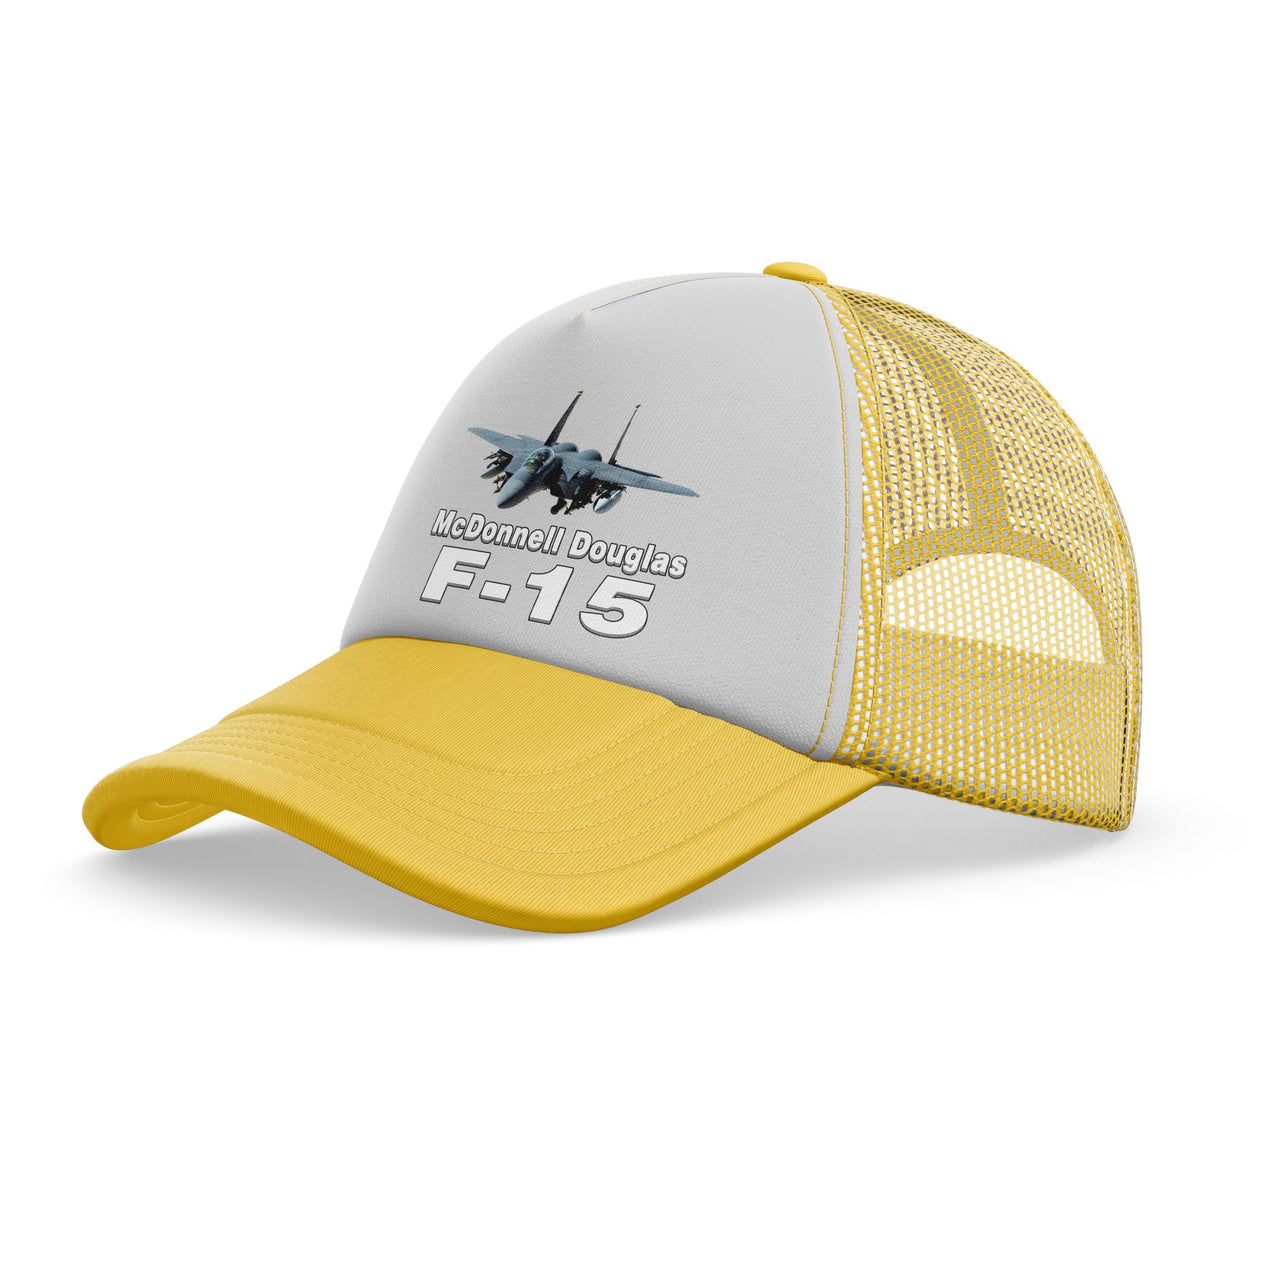 The McDonnell Douglas F15 Designed Trucker Caps & Hats